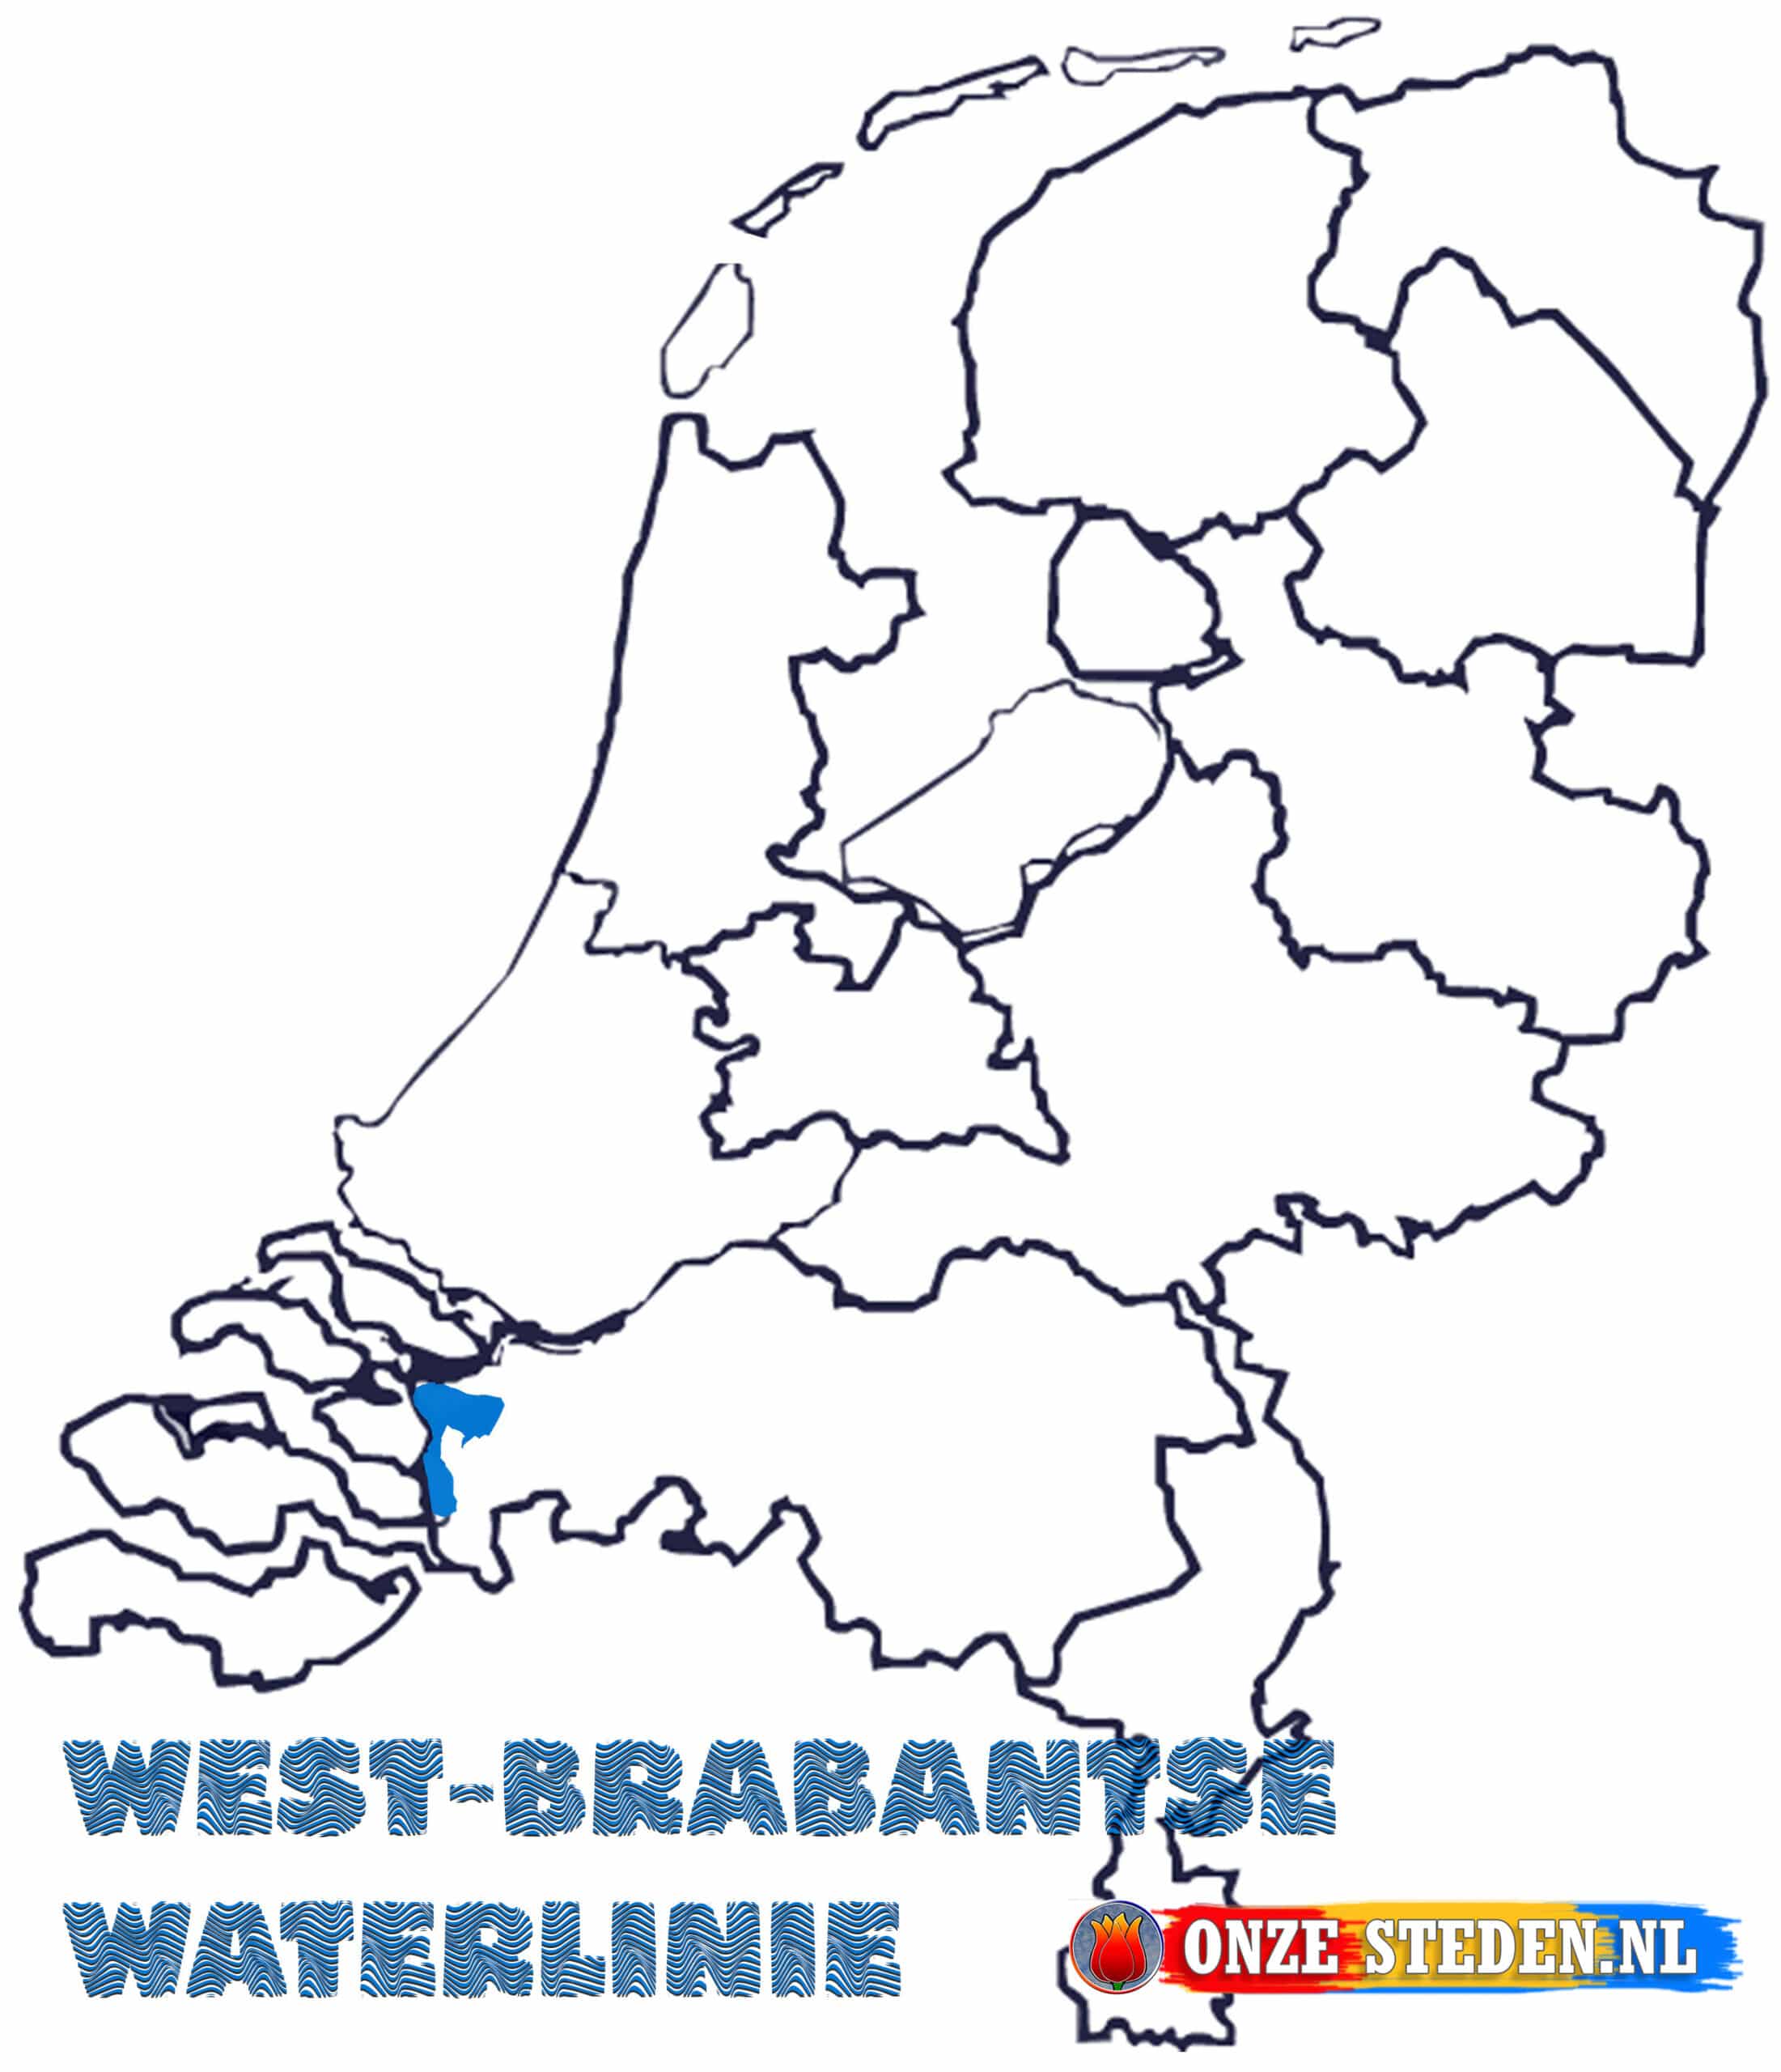 West Brabantse Waterlinie